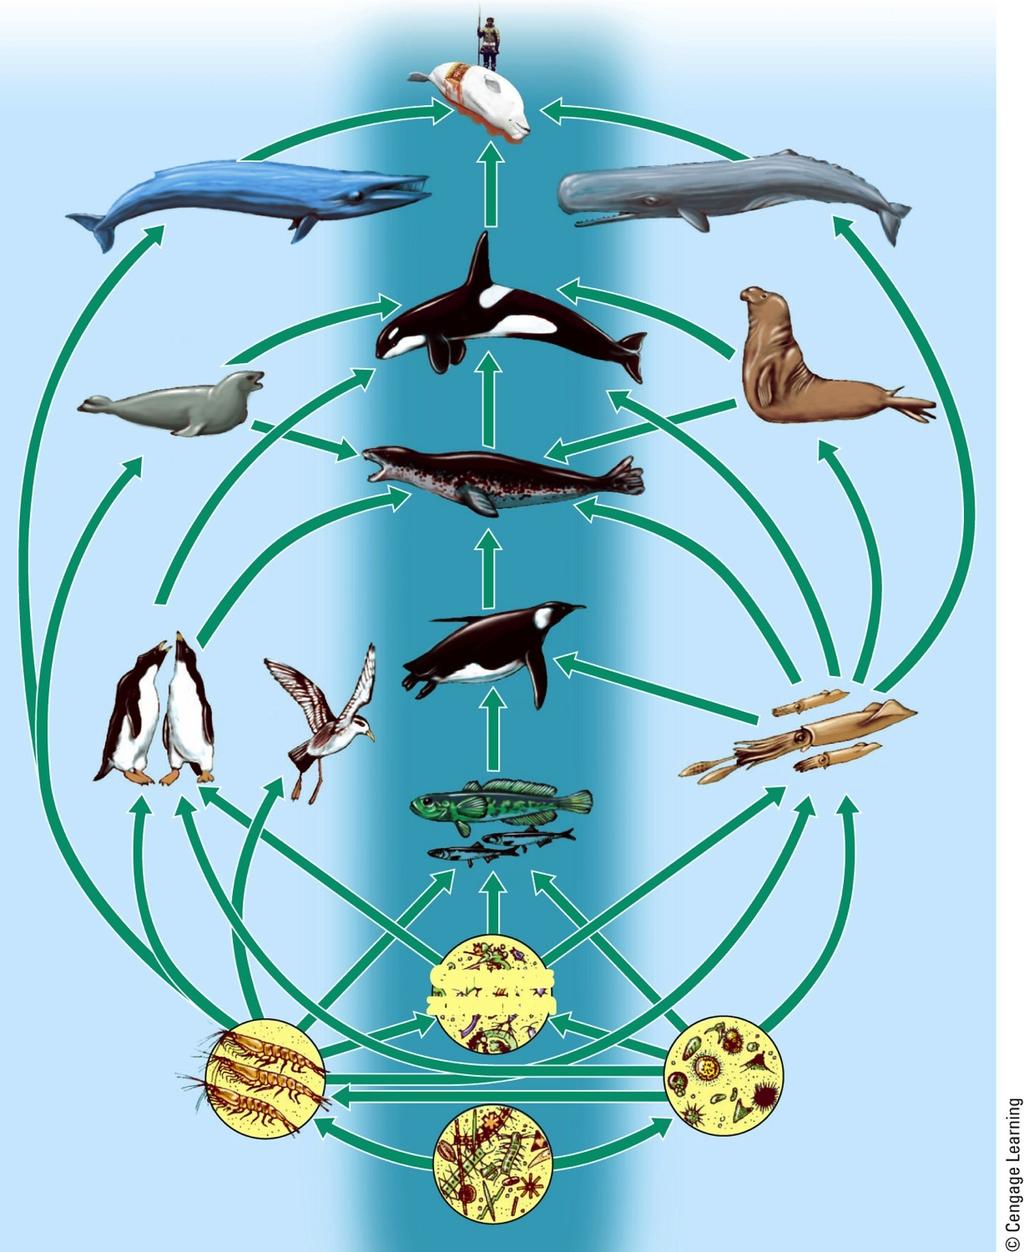 A Food Web Blue whale Humans Sperm whale Crabeater seal Killer whale Elephant seal Adelie penguin Leopard seal